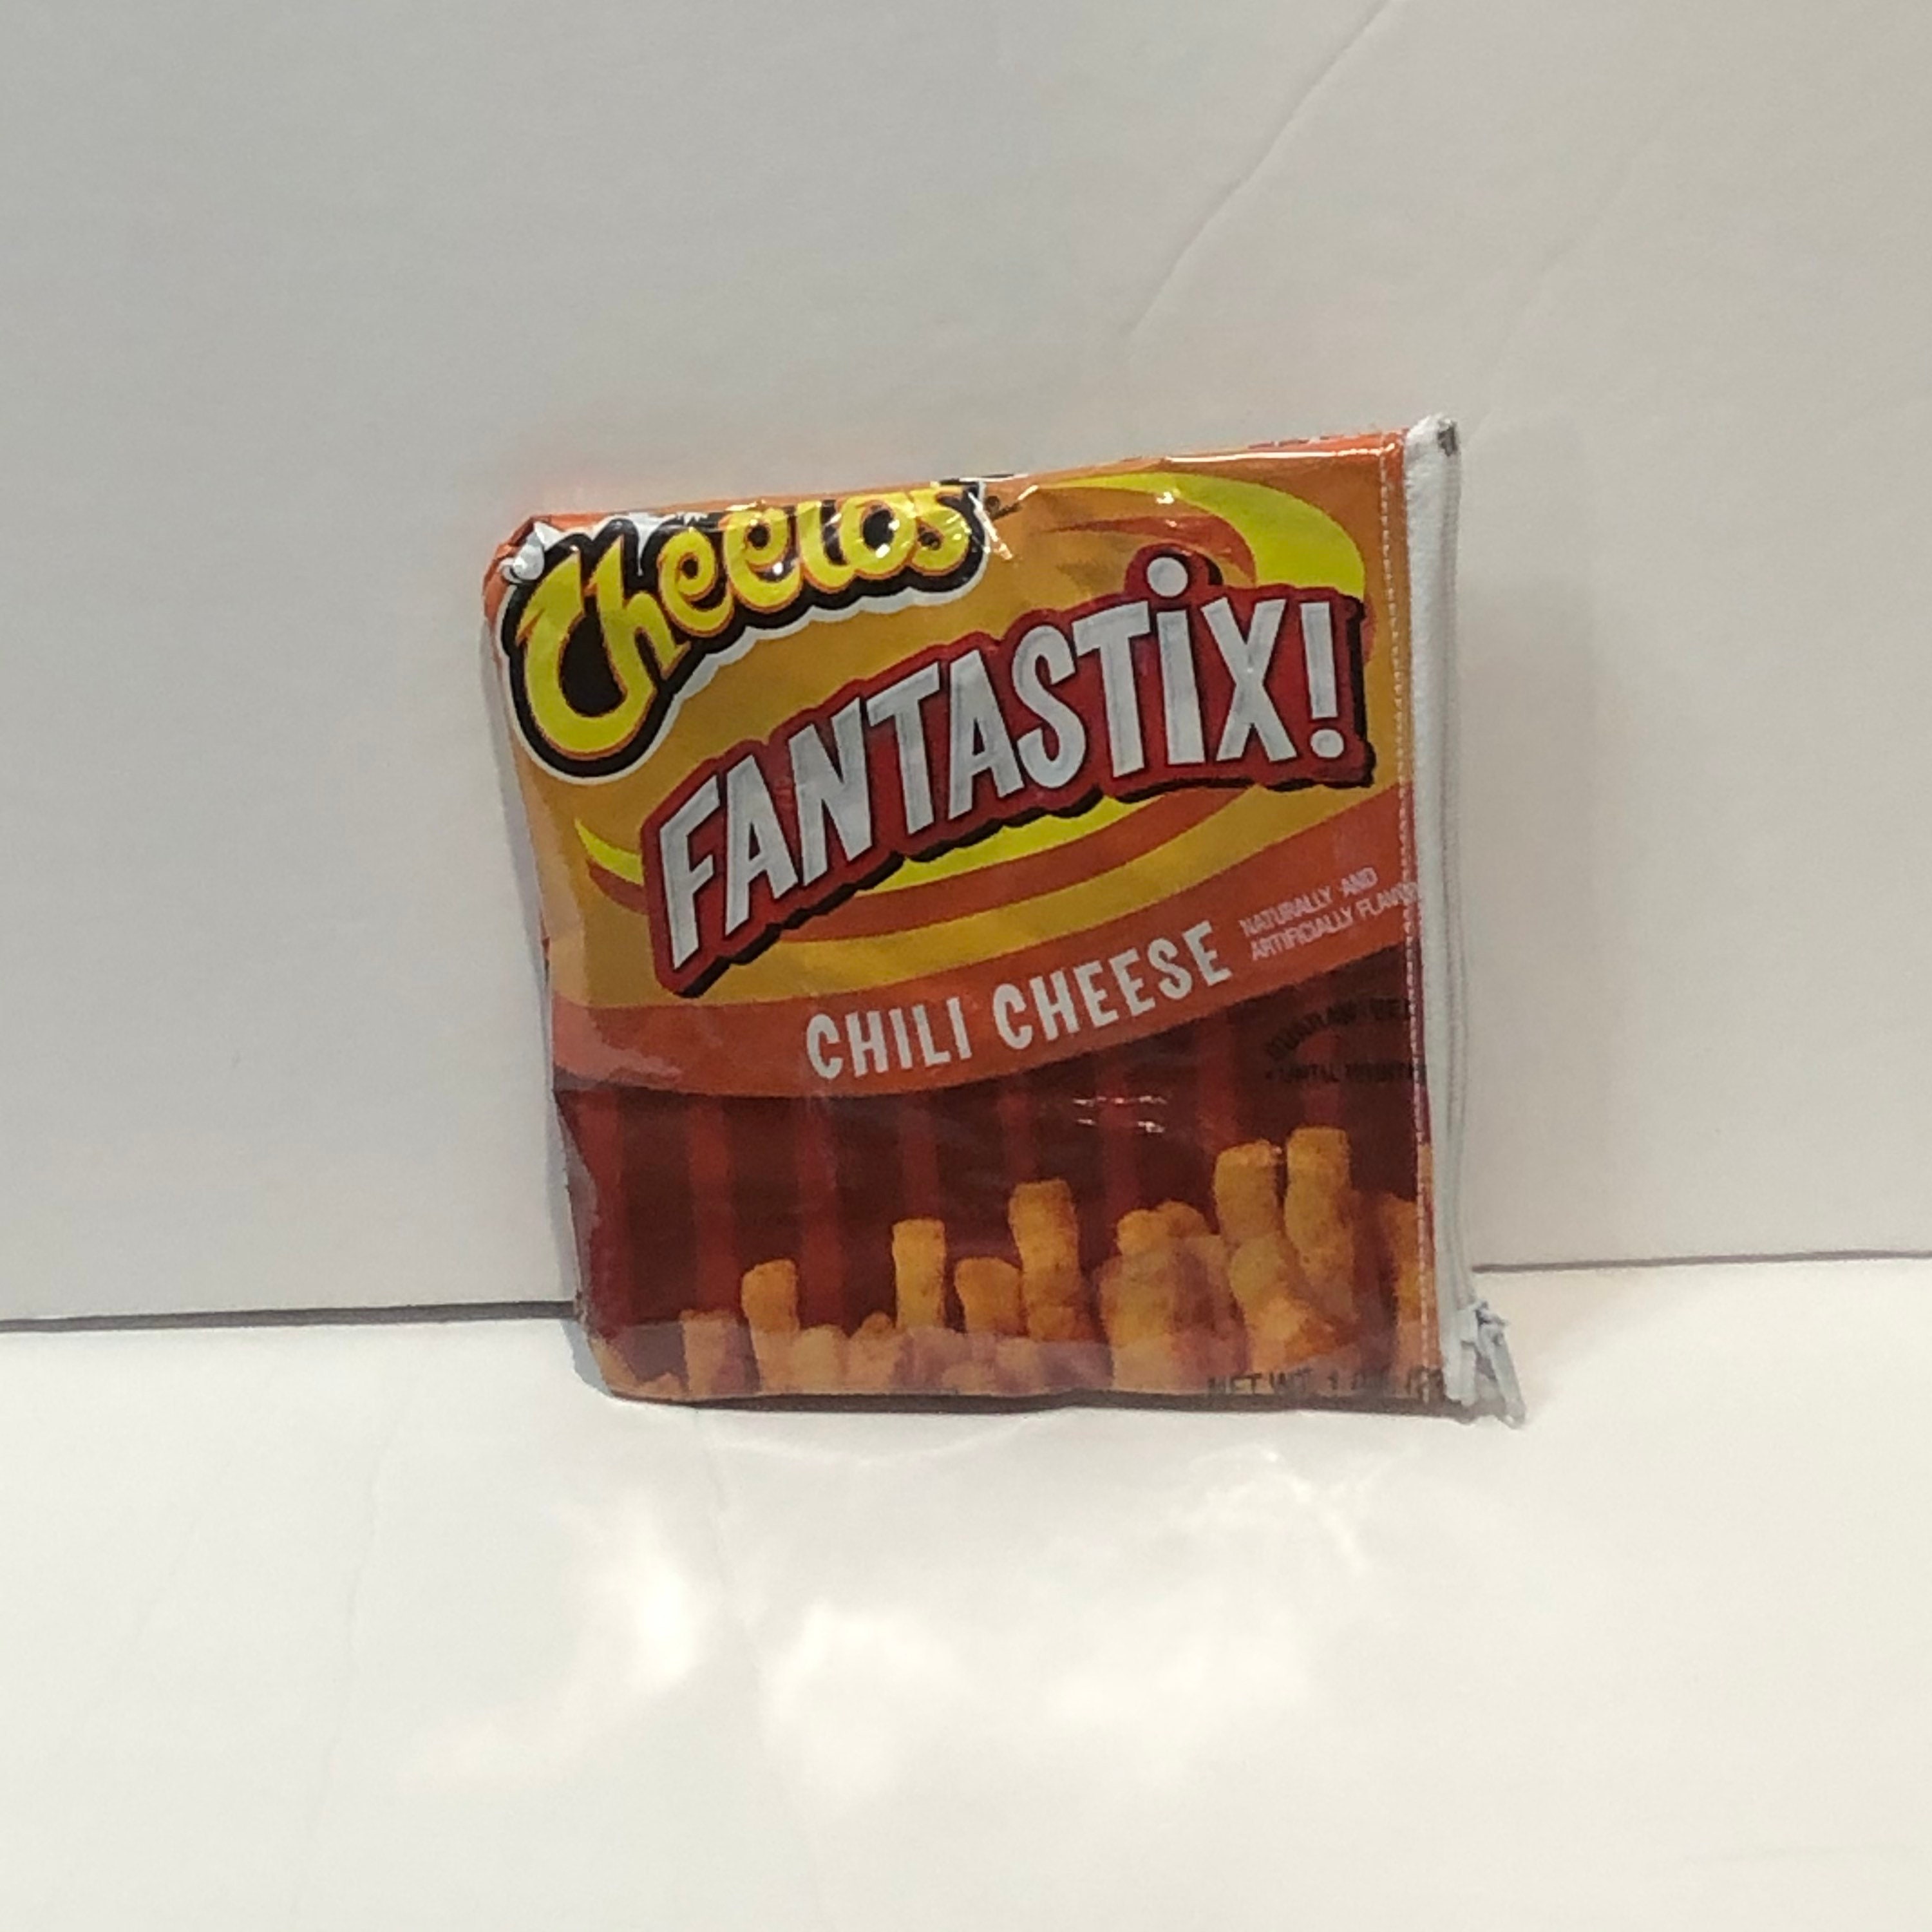 Fantastix Recycled Bag, Coin Bag/ Chili Cheese Cheetos, Coin Purse